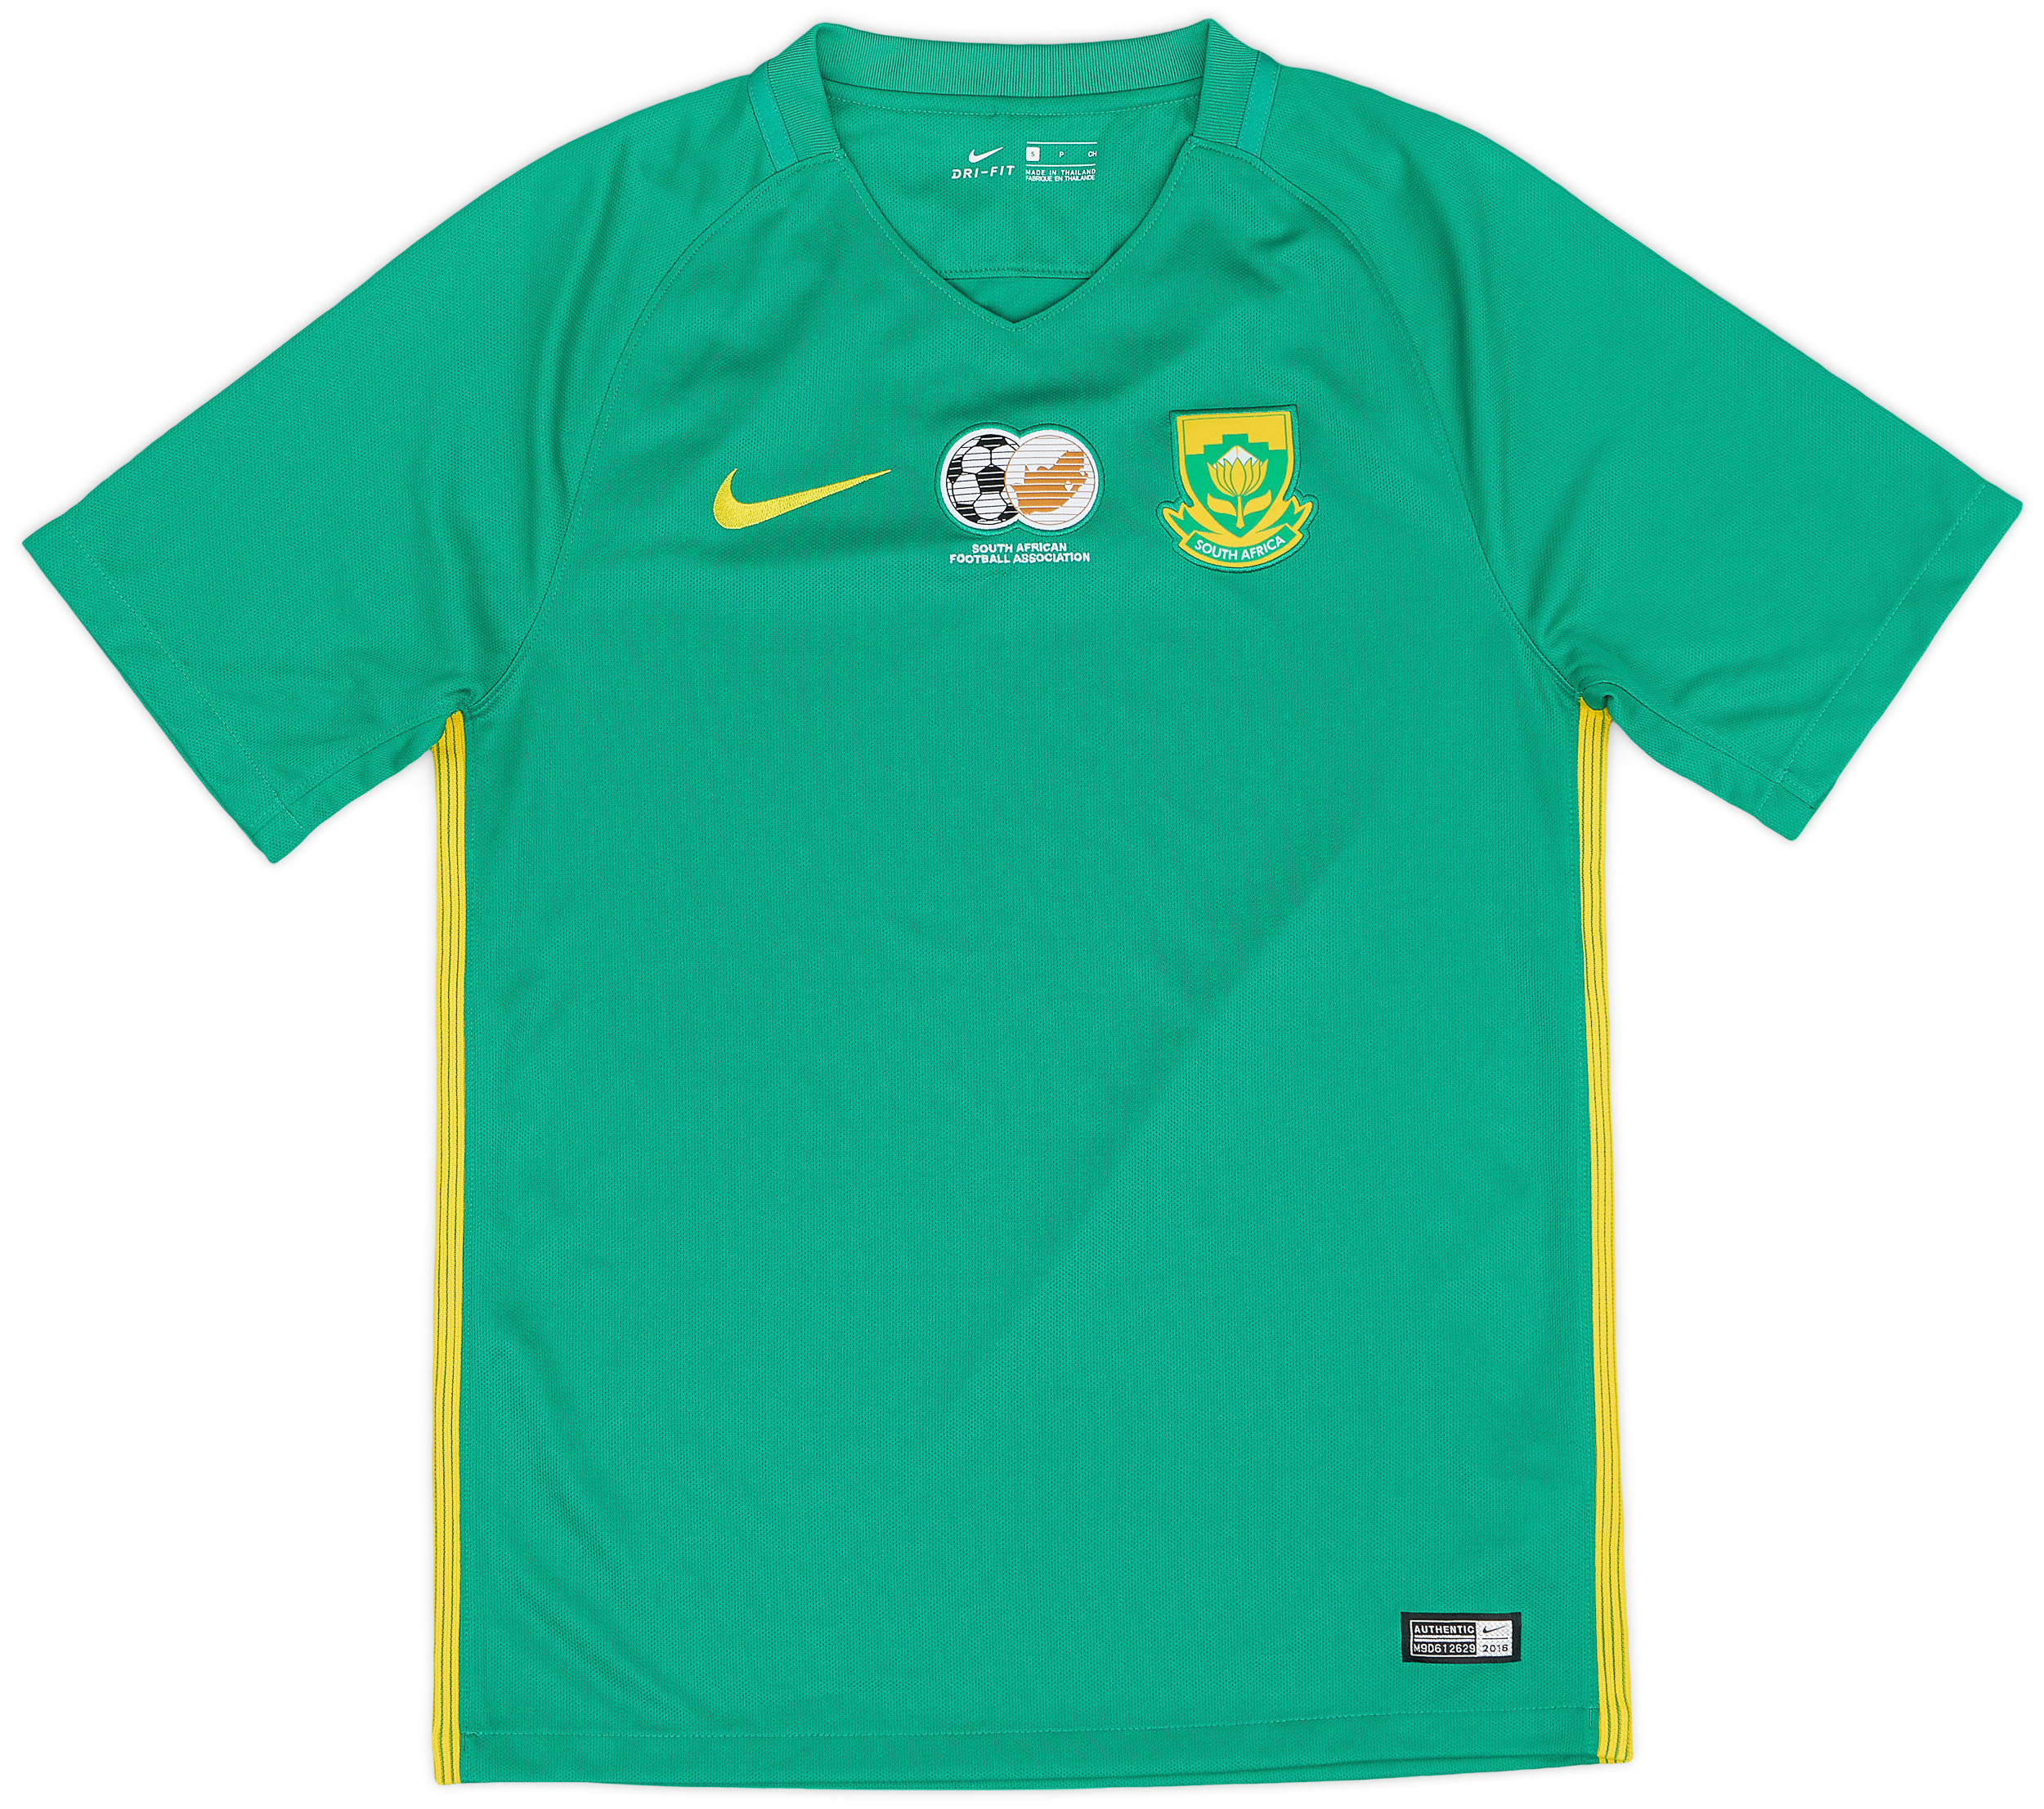 2017-18 South Africa Away Shirt - 9/10 - ()